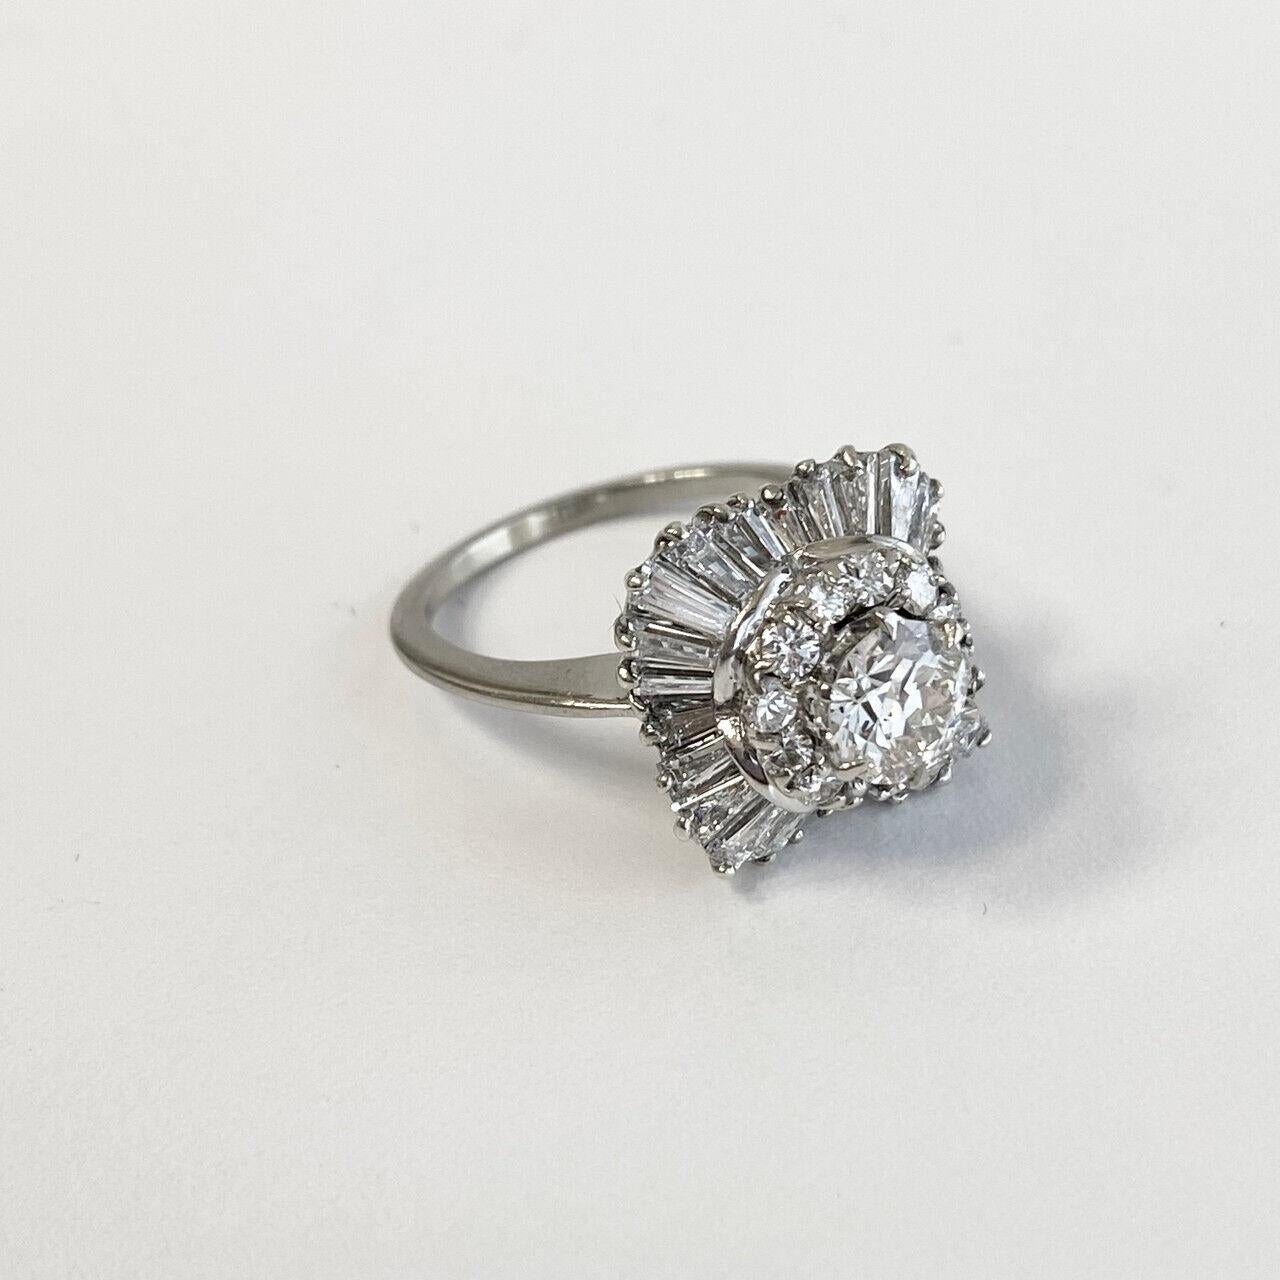 Women's Vintage 14k White Gold Diamond Ring with Old European Cut Diamond For Sale